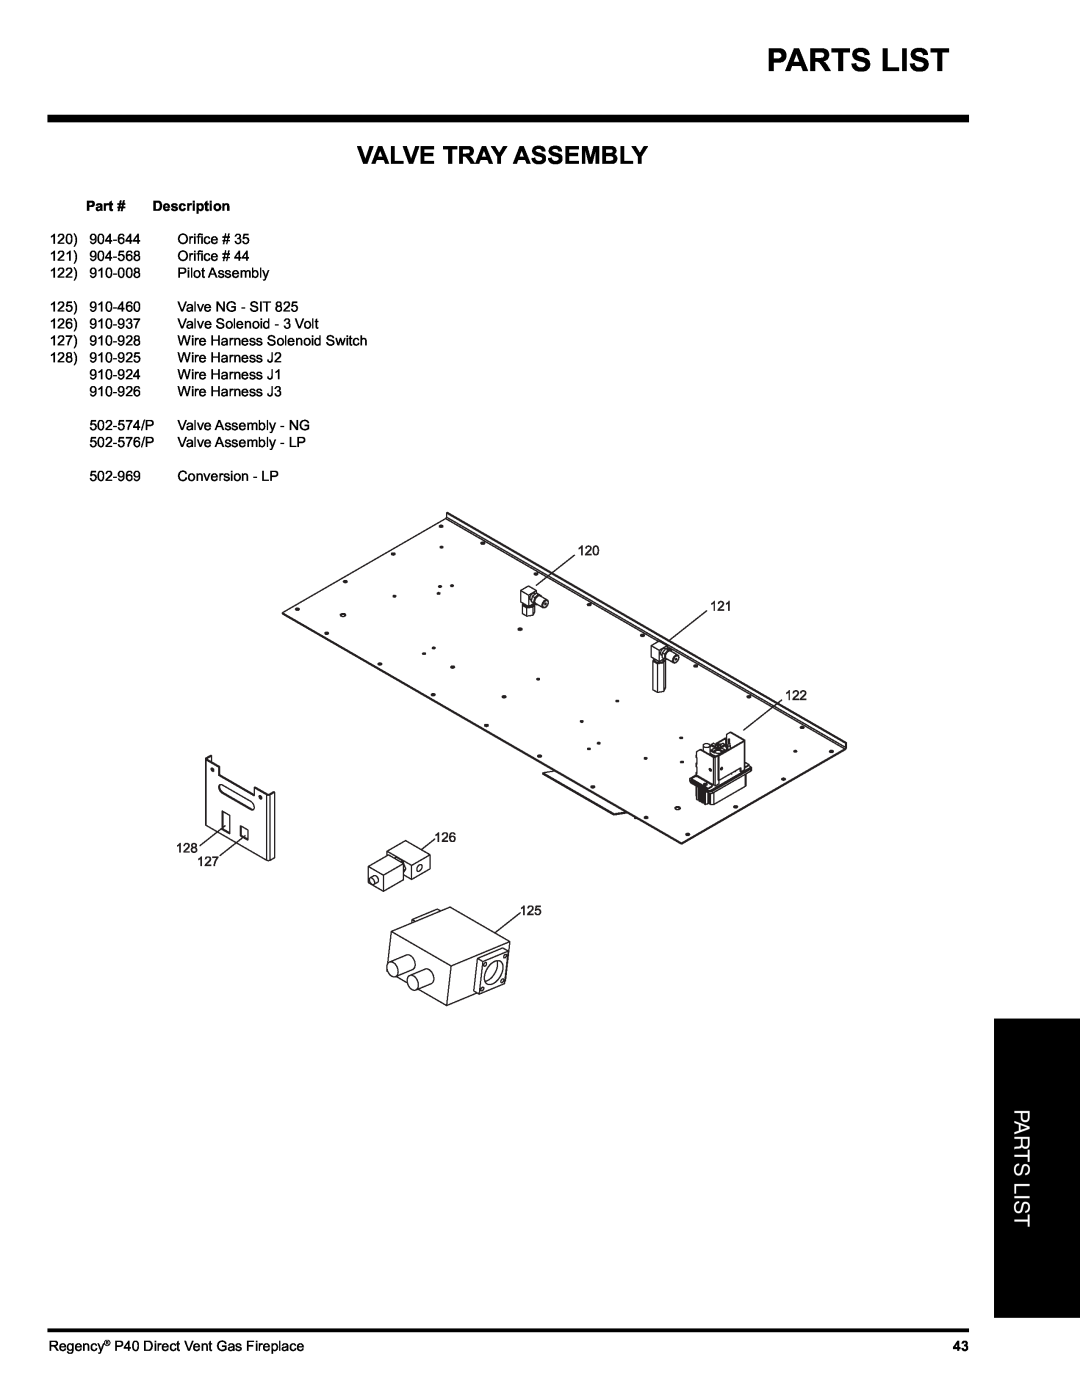 Regency P40-LP, P40-NG installation manual Valve Tray Assembly, Parts List, Description 